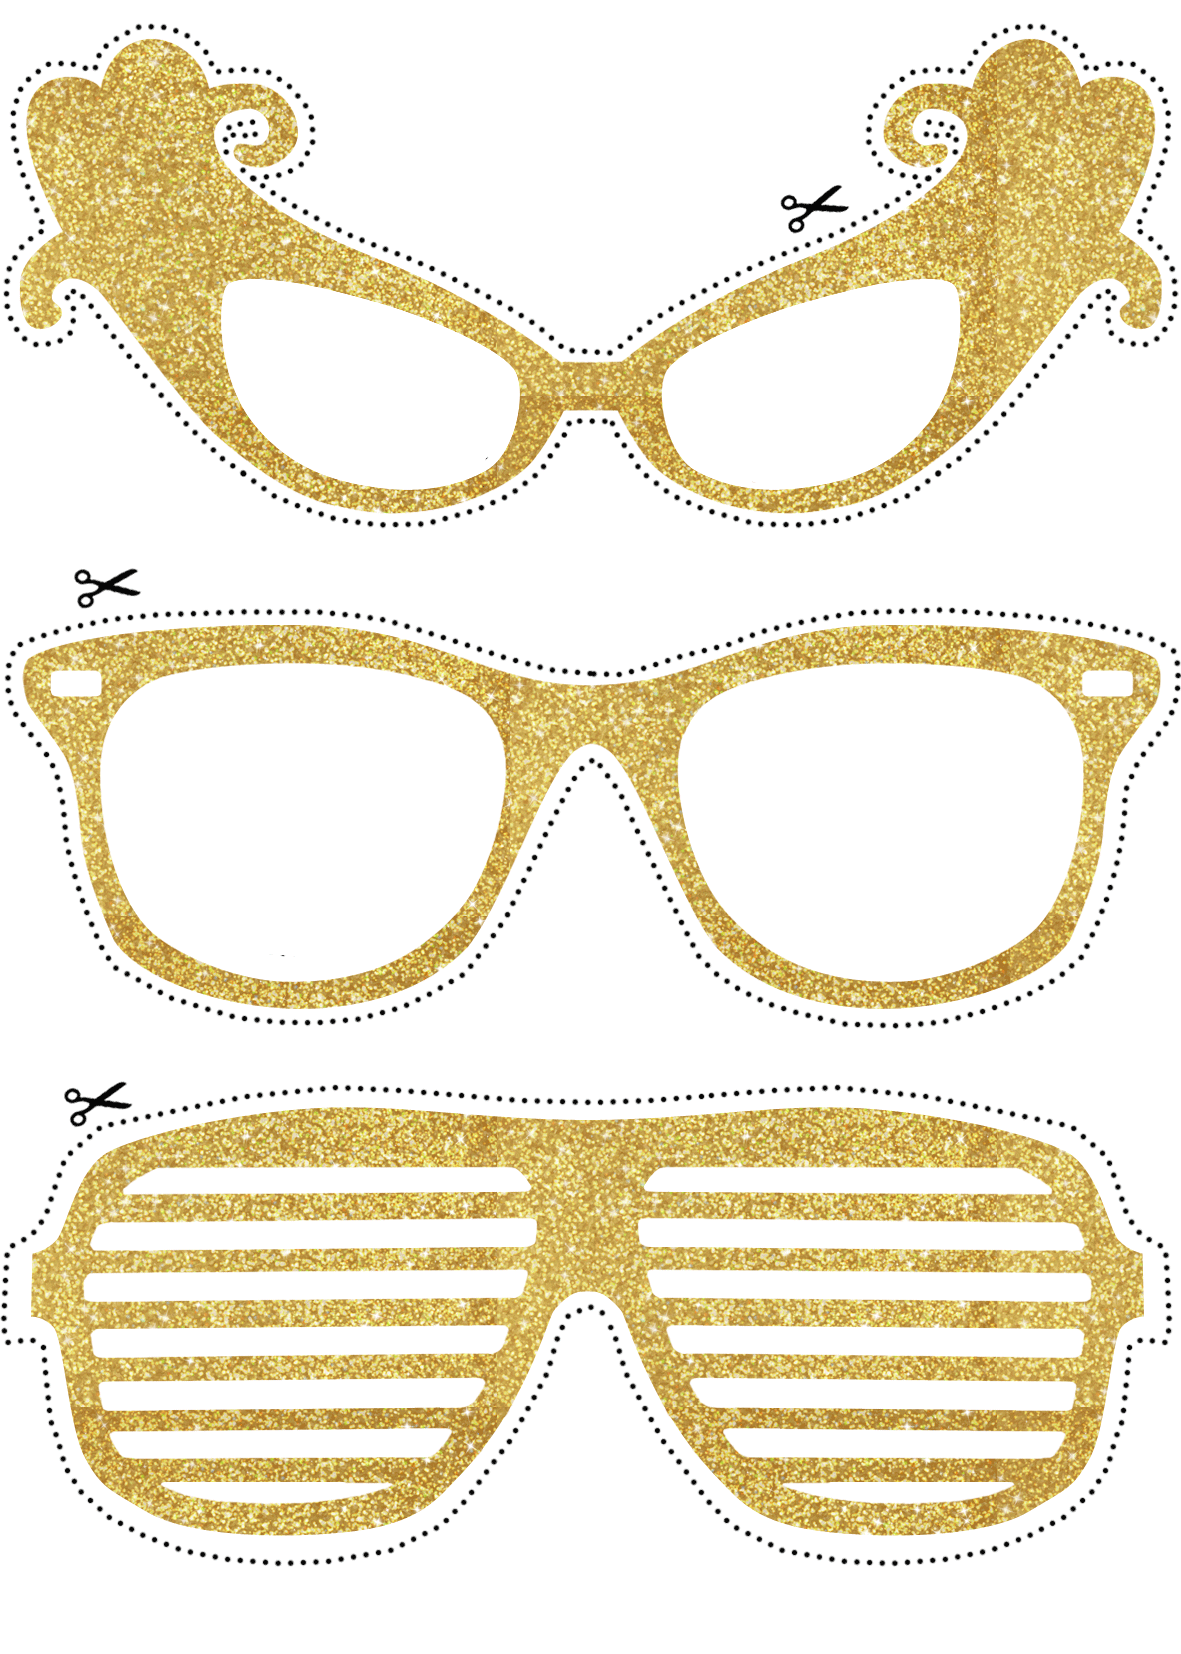 Sunglasses clipart glitter. Photo booth props golden